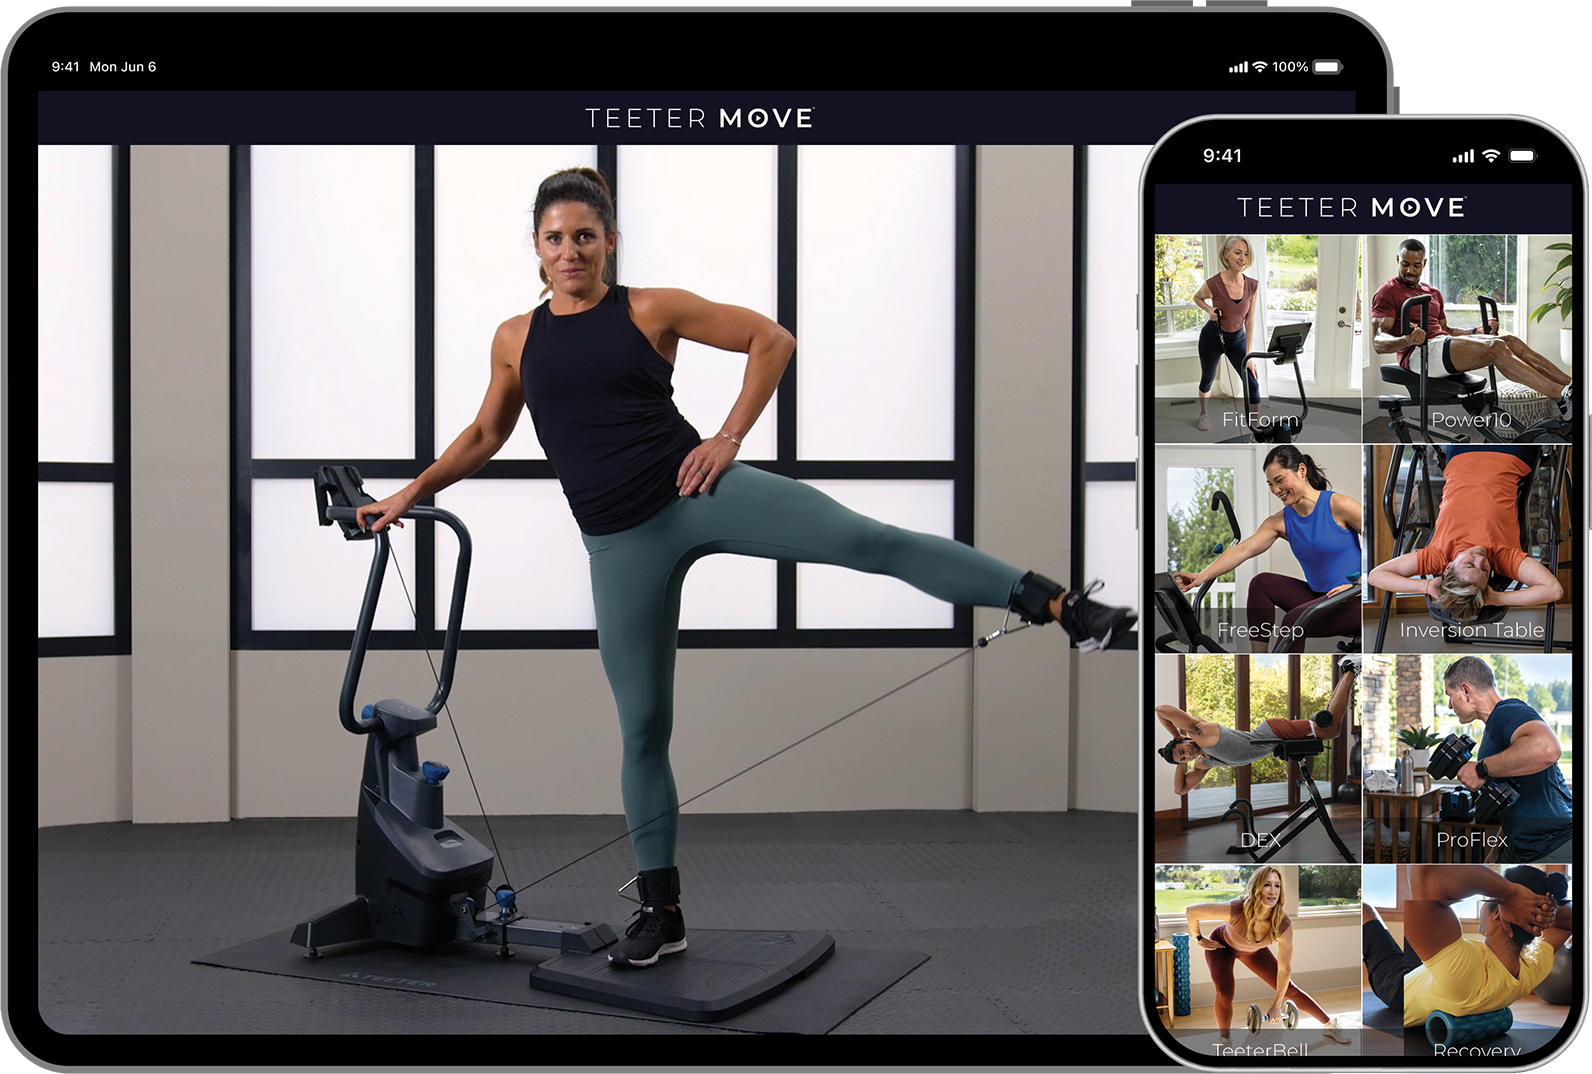 Teeter Move App on iPad and iPhone